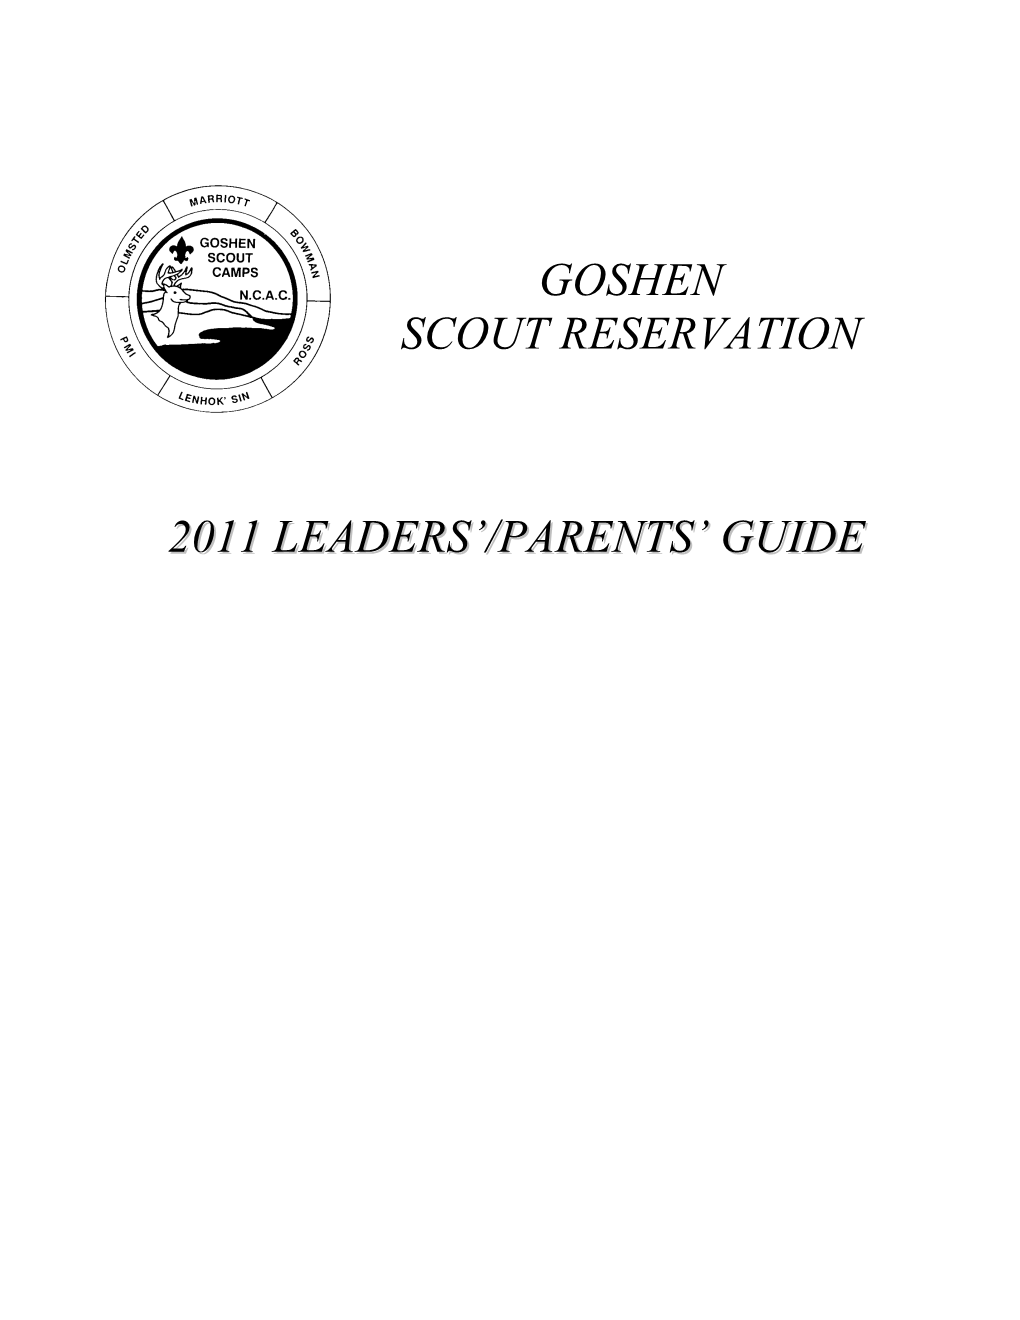 Goshen Scout Reservation 2011 Leaders'/Parents' Guide